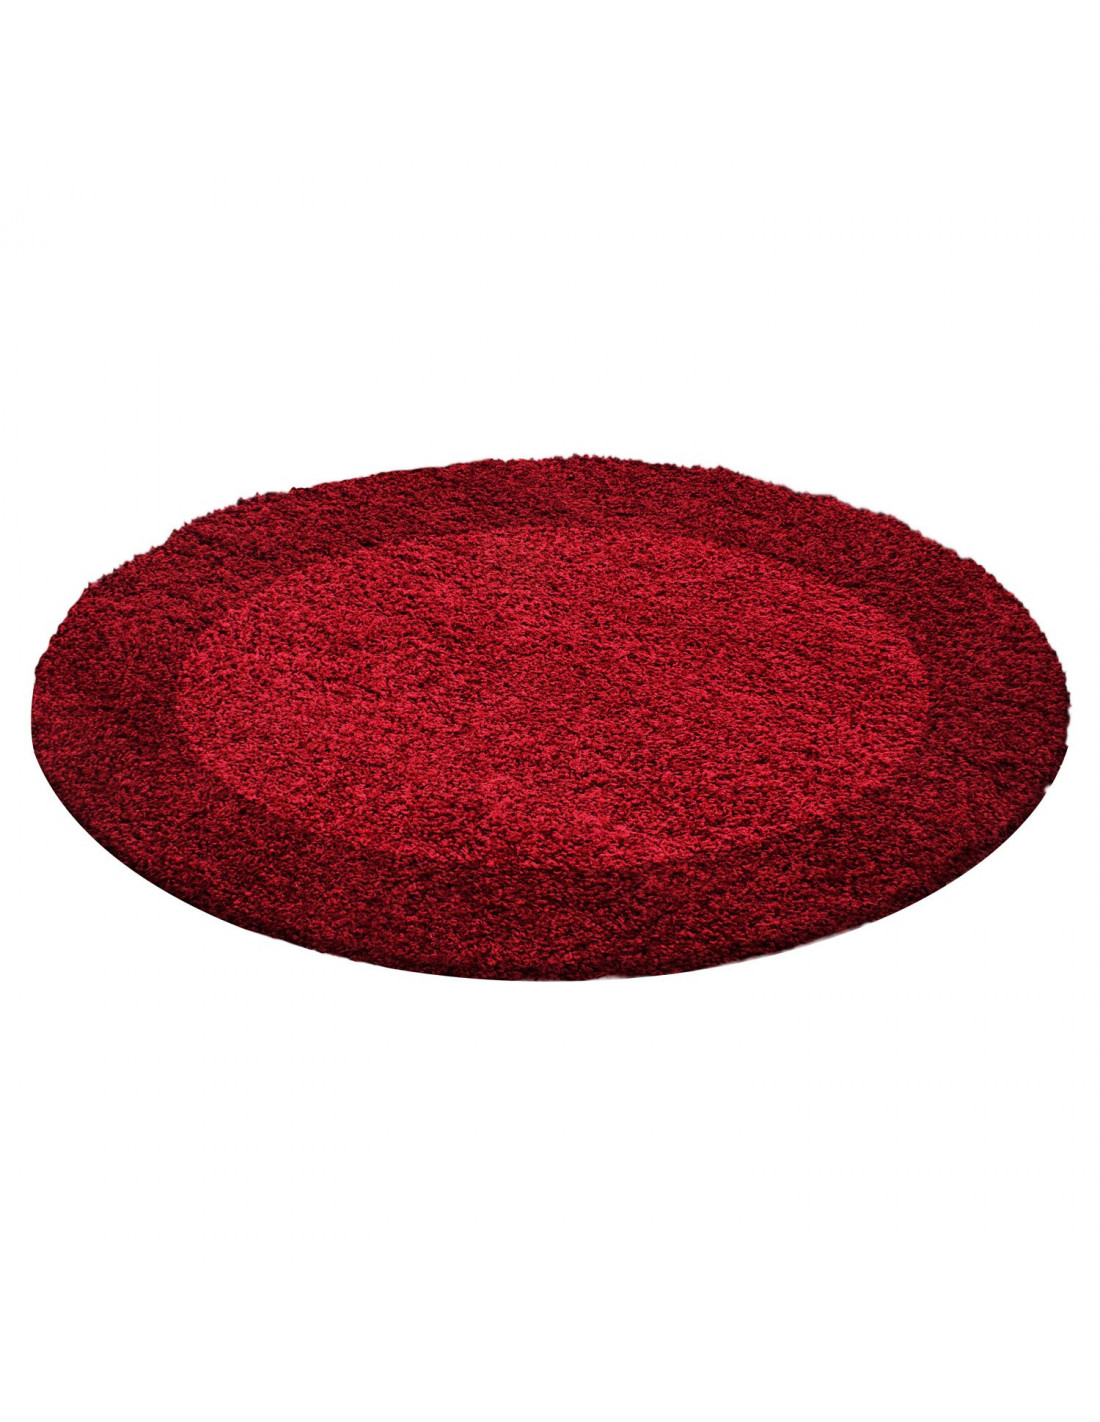 Shaggy Carpet Shaggy Carpet 2 färger Röd och Bordeaux